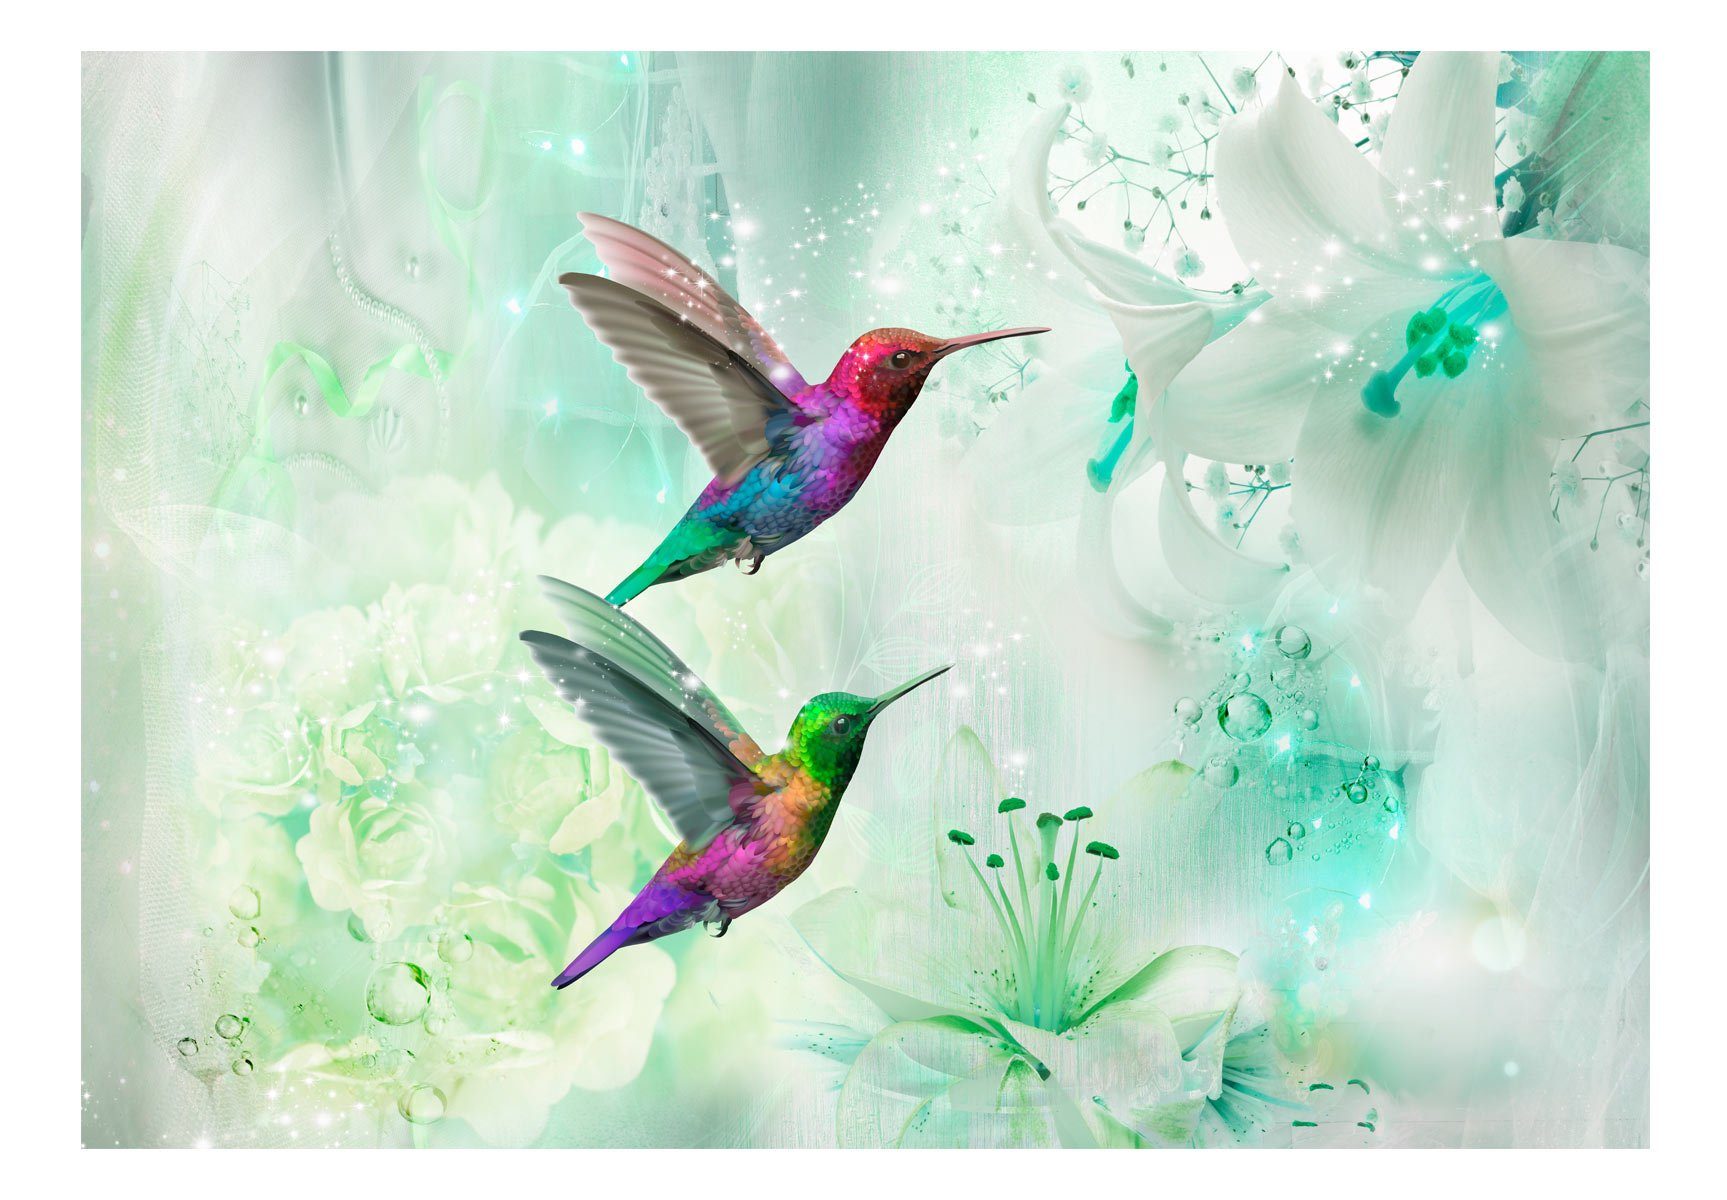 KUNSTLOFT Vliestapete Colourful matt, Tapete 1.47x1.05 m, (Green) Hummingbirds lichtbeständige Design